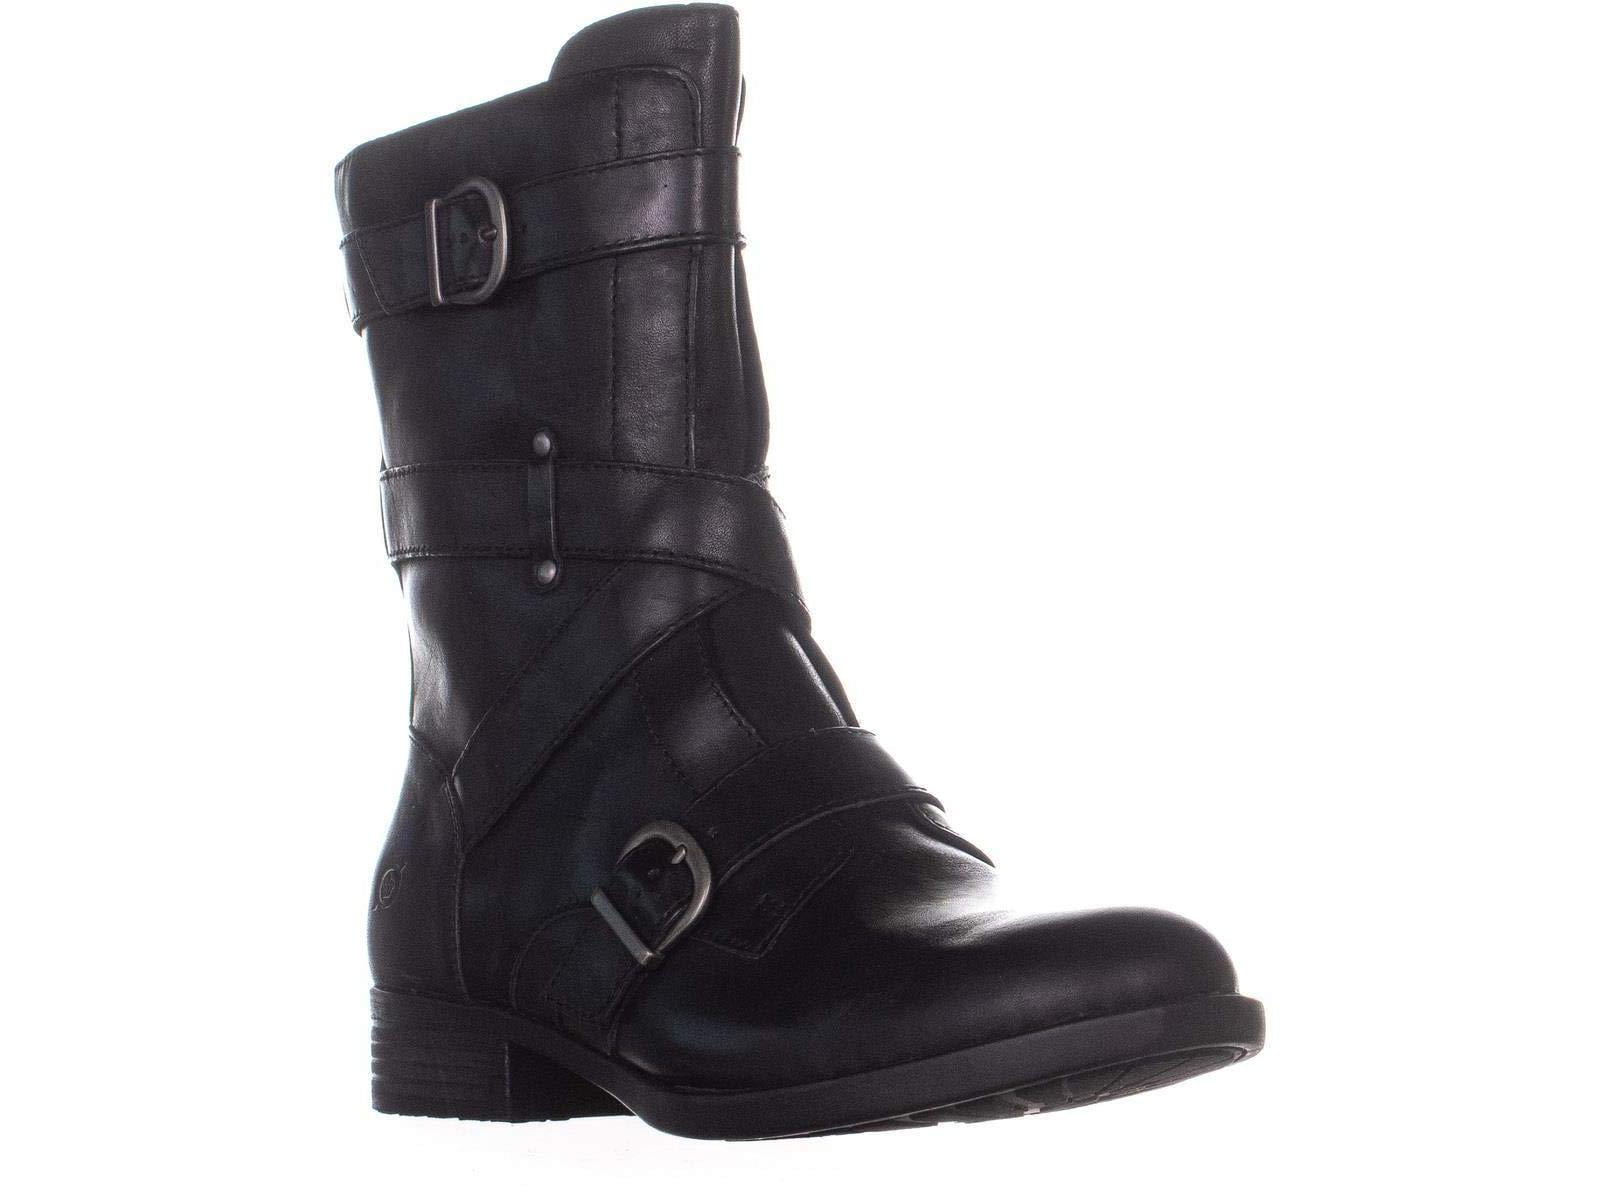 boc black leather boots